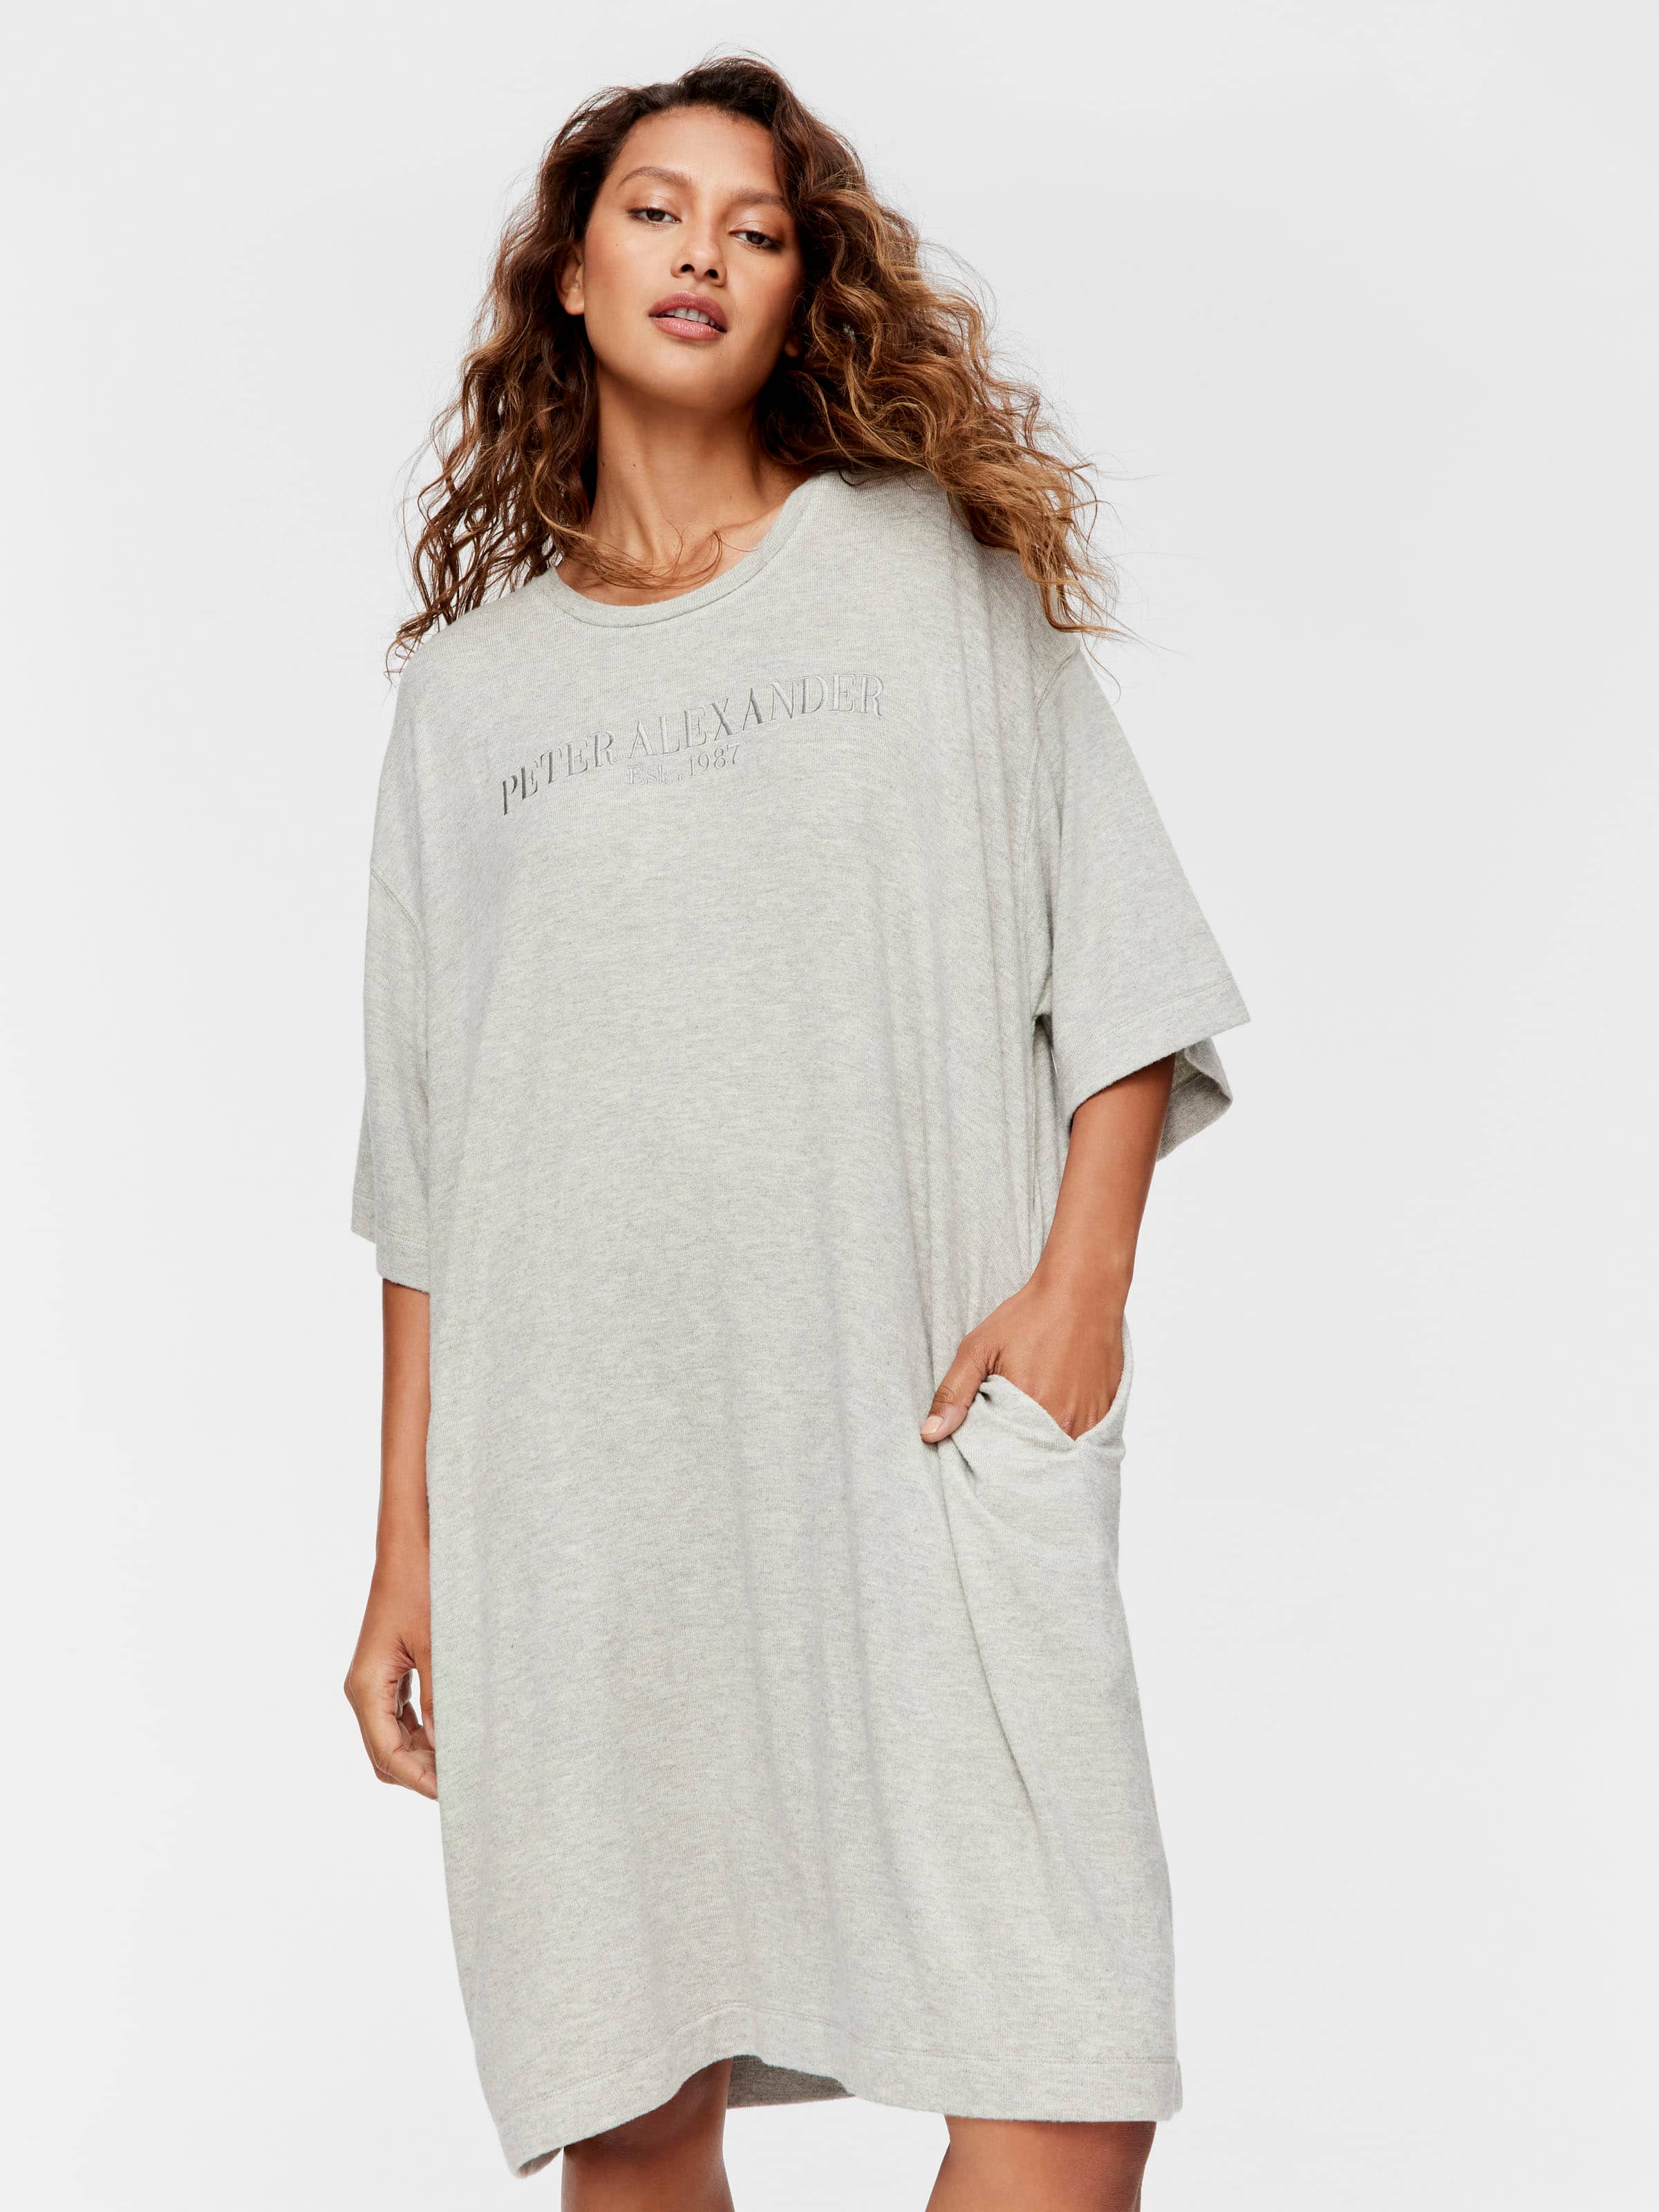 Women's Nightwear, Nightdresses & Sleep T-Shirts